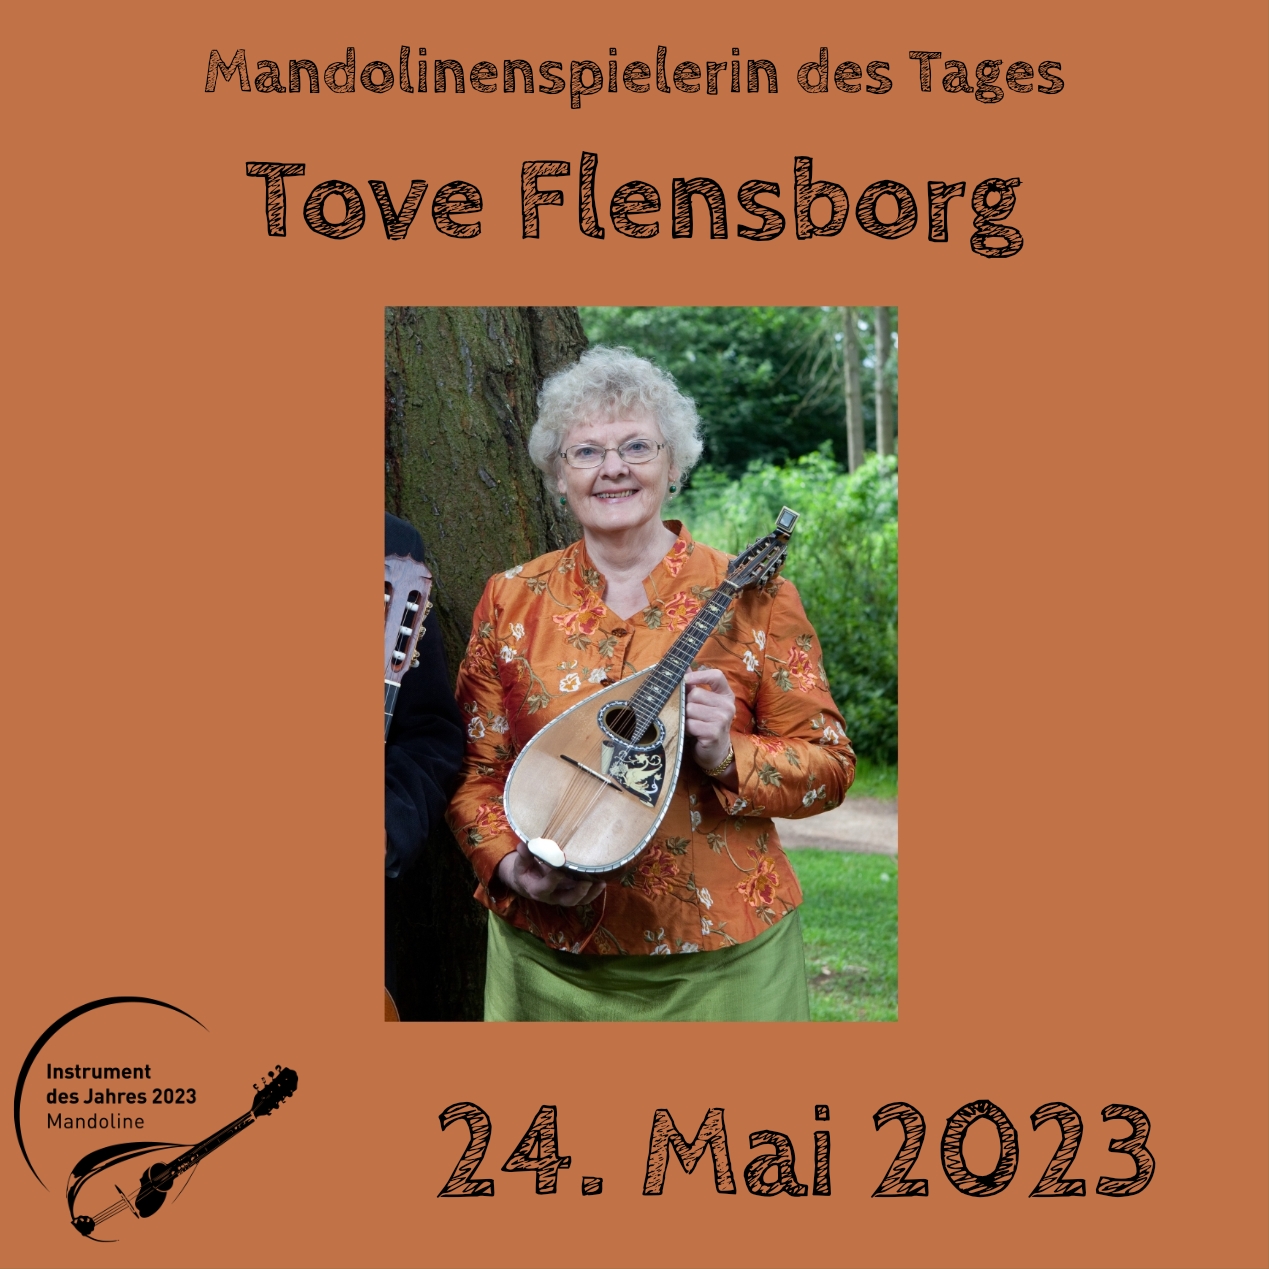 Tove Flensborg Mandoline Instrument des Jahres 2023 Mandolinenspieler Mandolinenspielerin des Tages